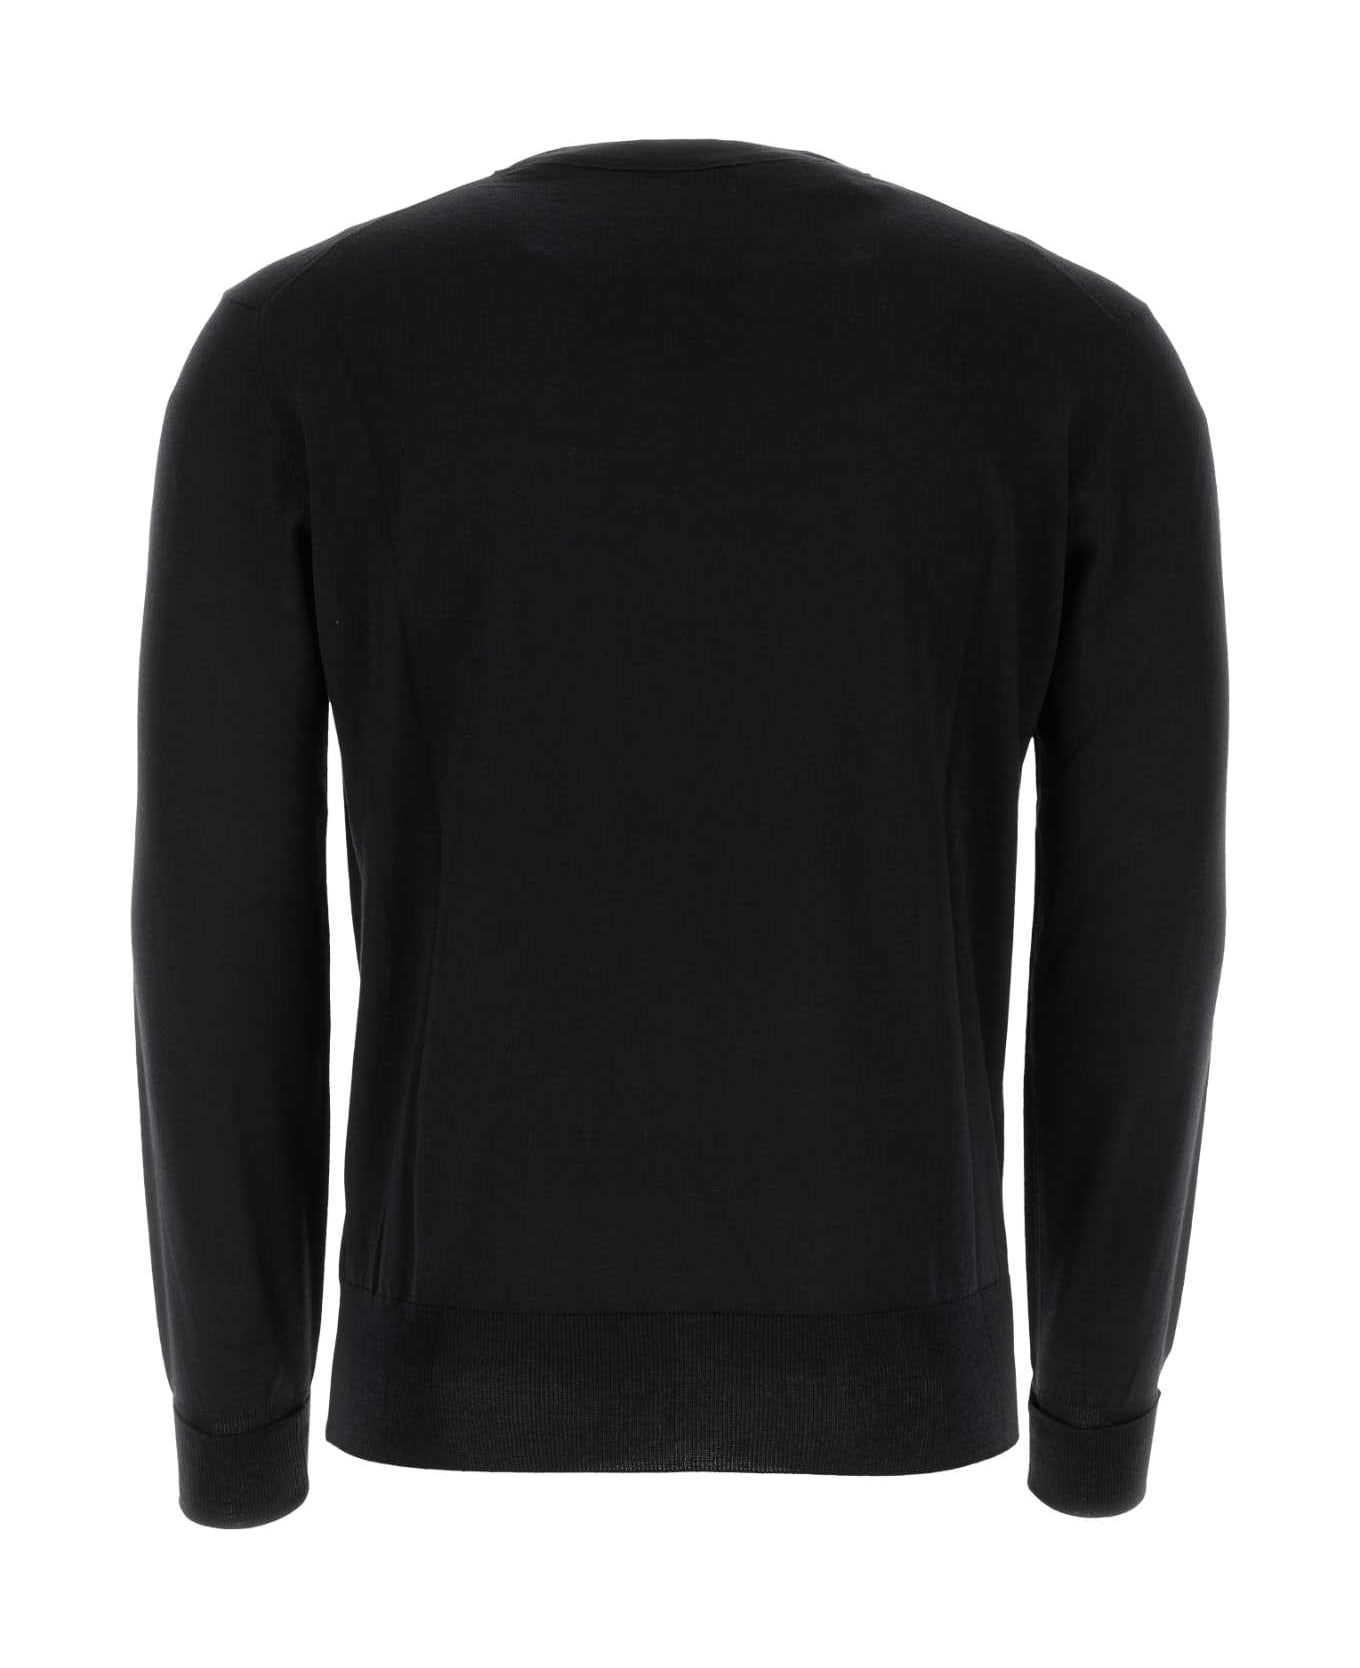 PT Torino Black Wool Sweater - 0990